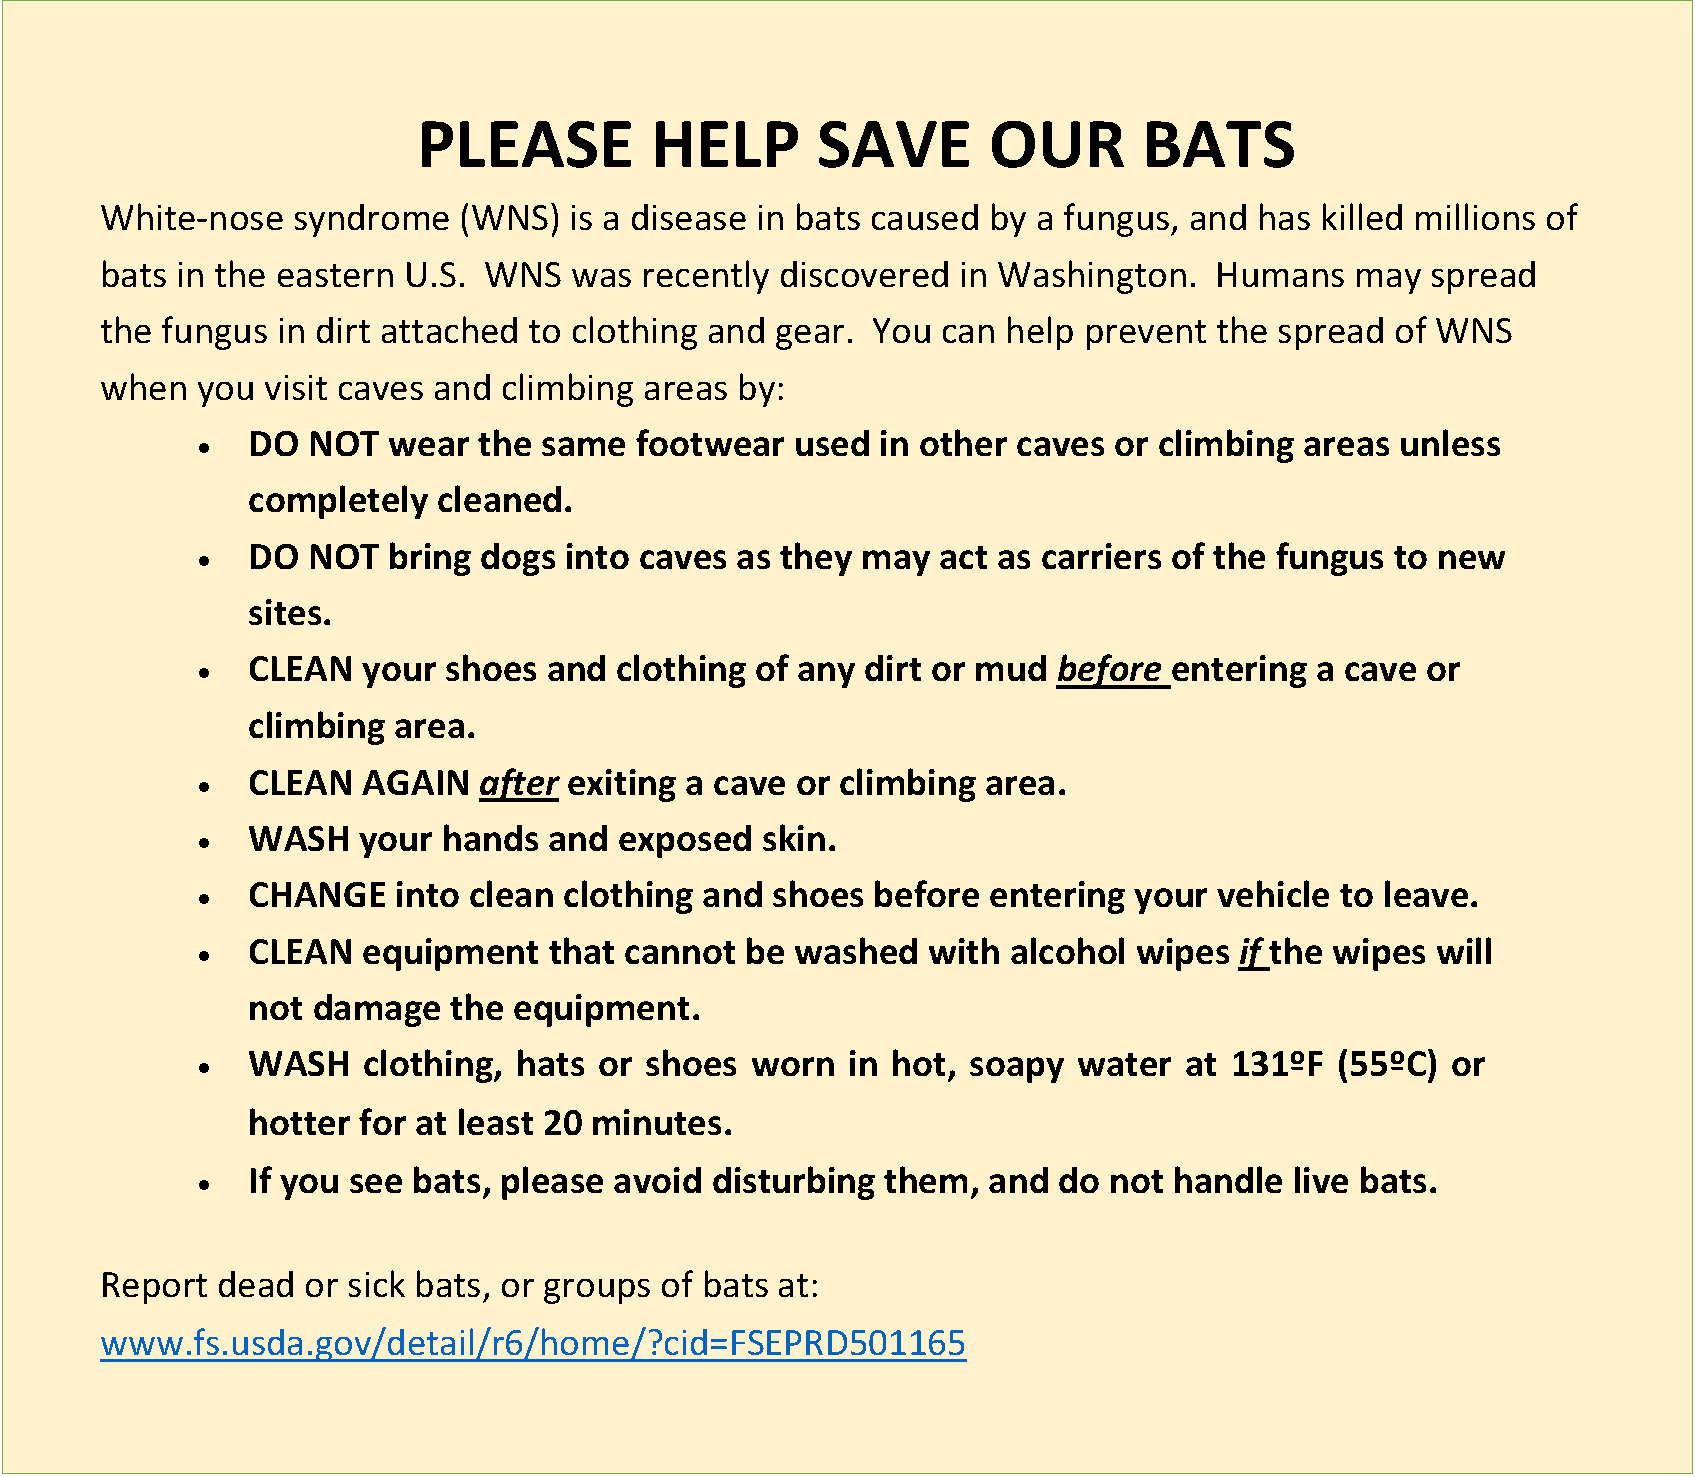 Help protect bats!